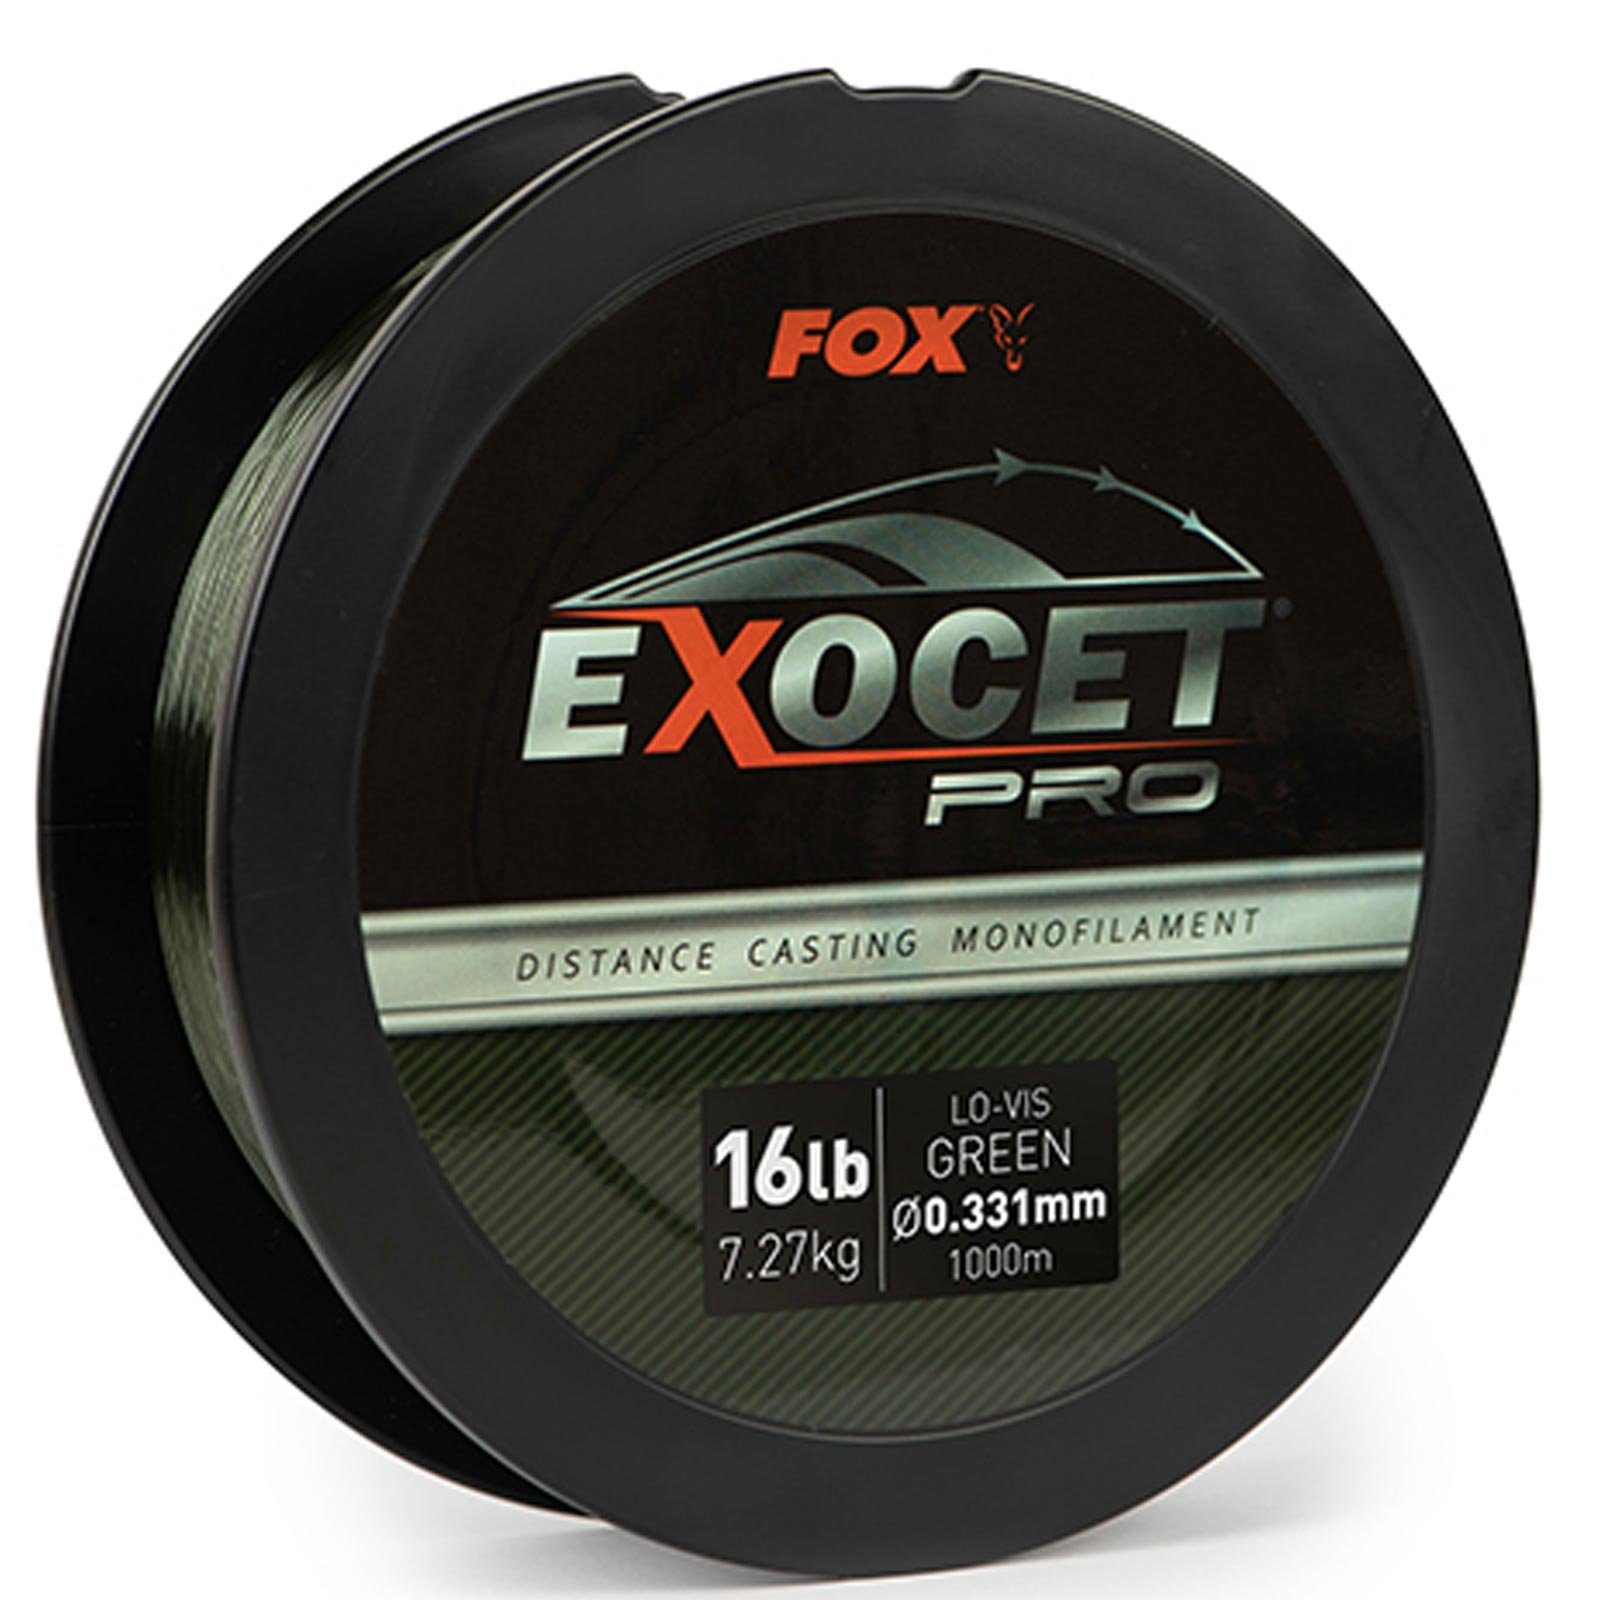 Fox Angelschnur, 1000 m Länge, Fox Exocet Pro Monofilament Lo-Vis Green 0.331mm 16lbs / 7.27kgs (1000m)Monofile Angelschnur